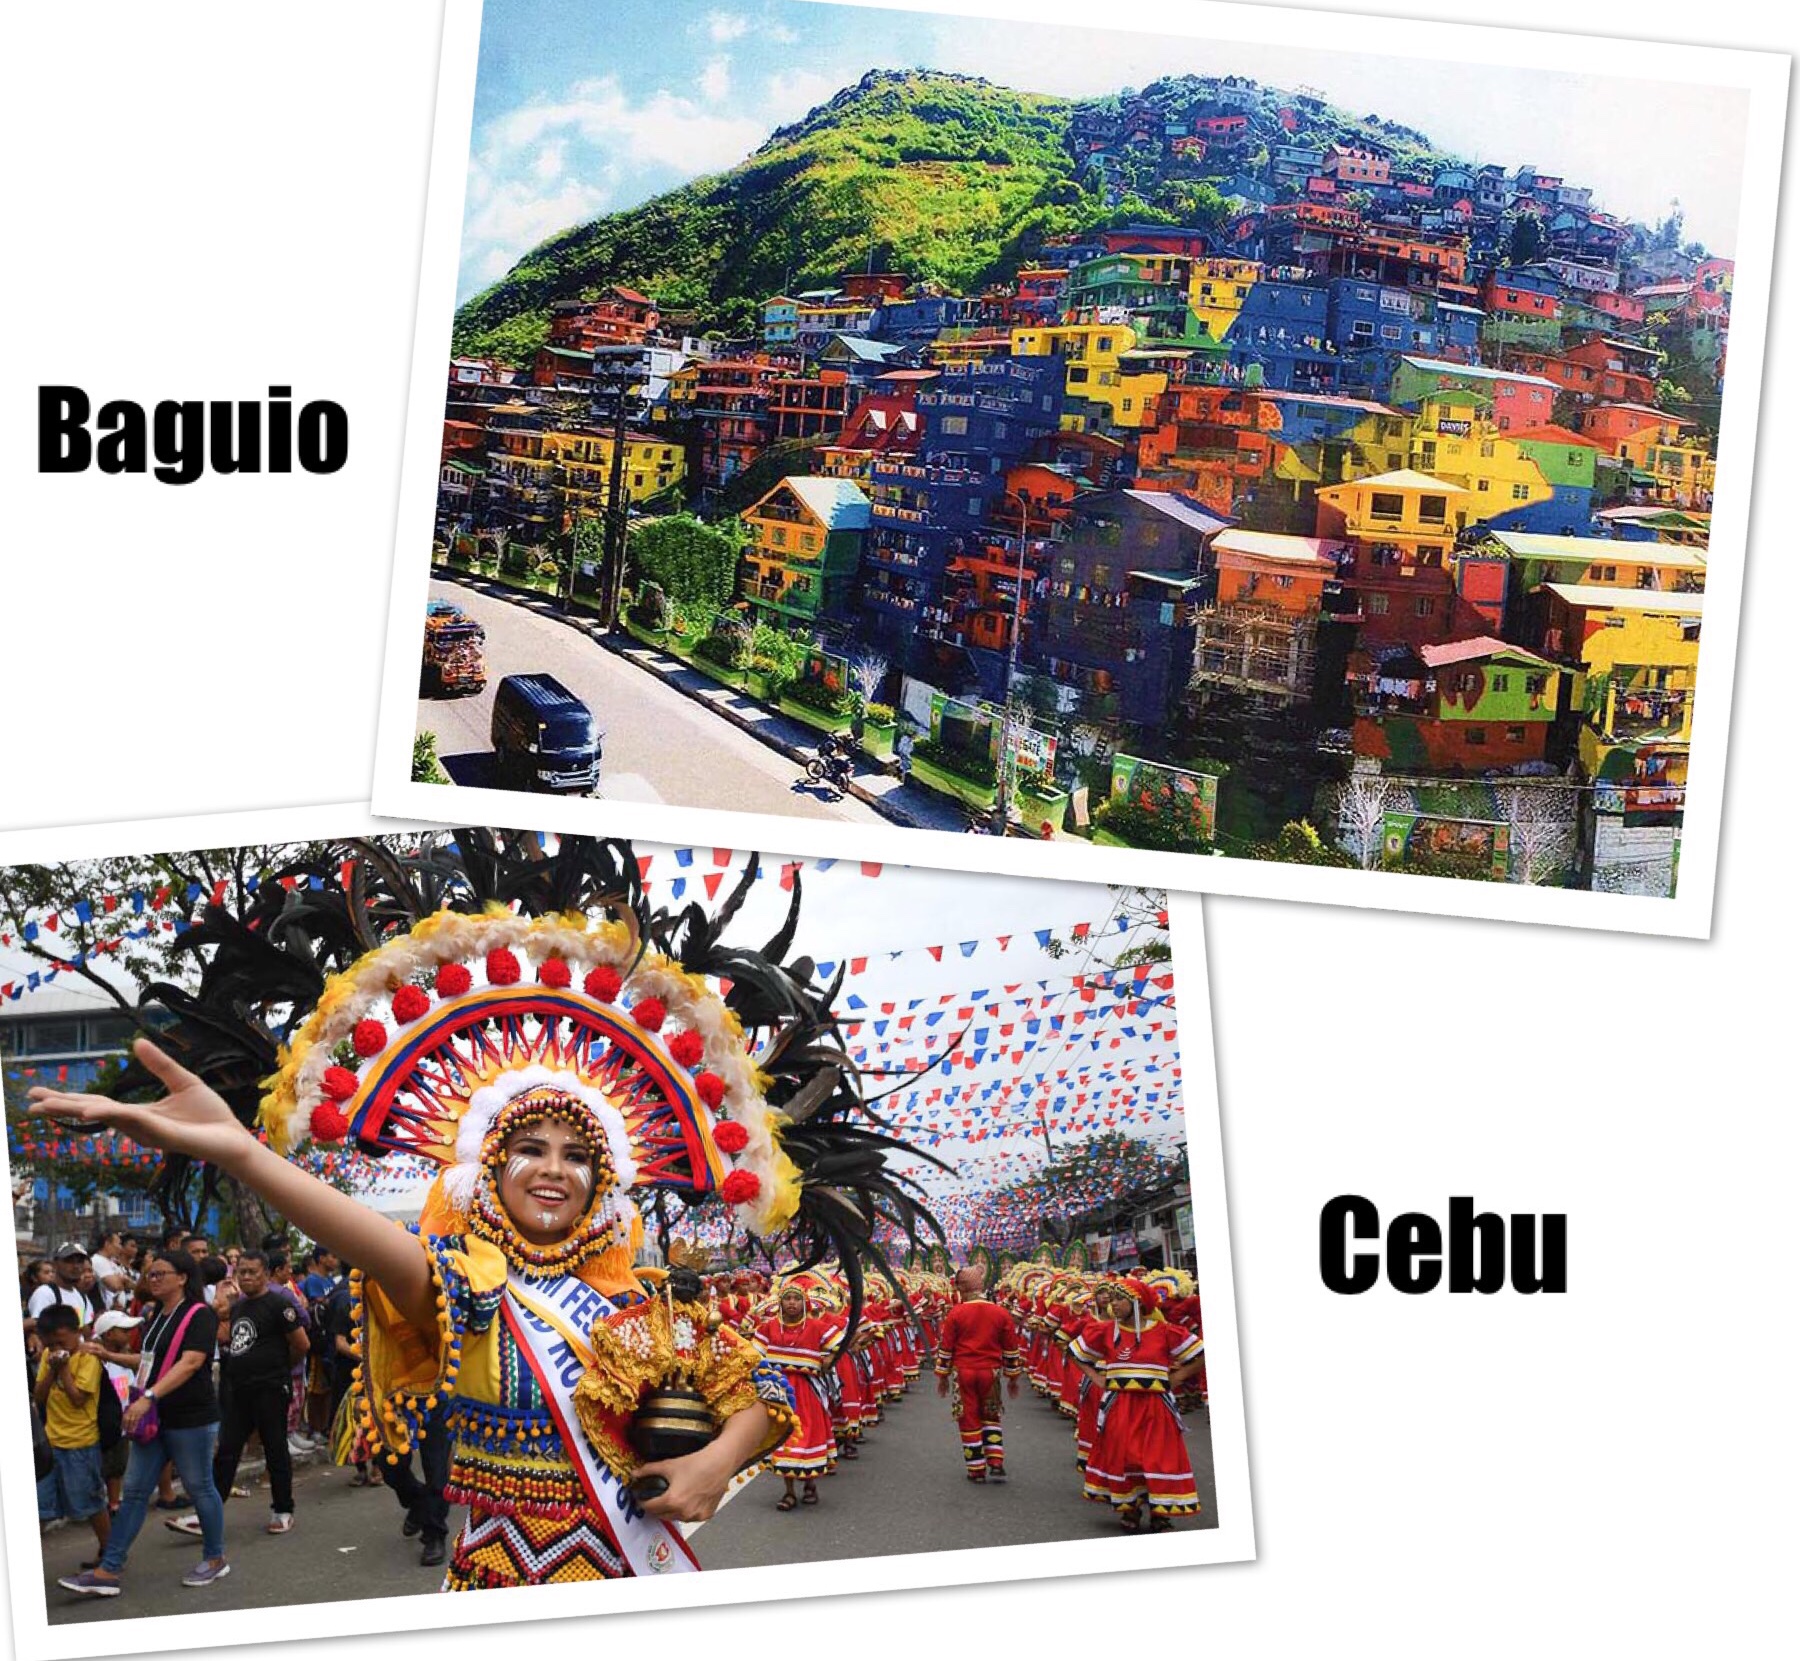 Cebu - Baguio